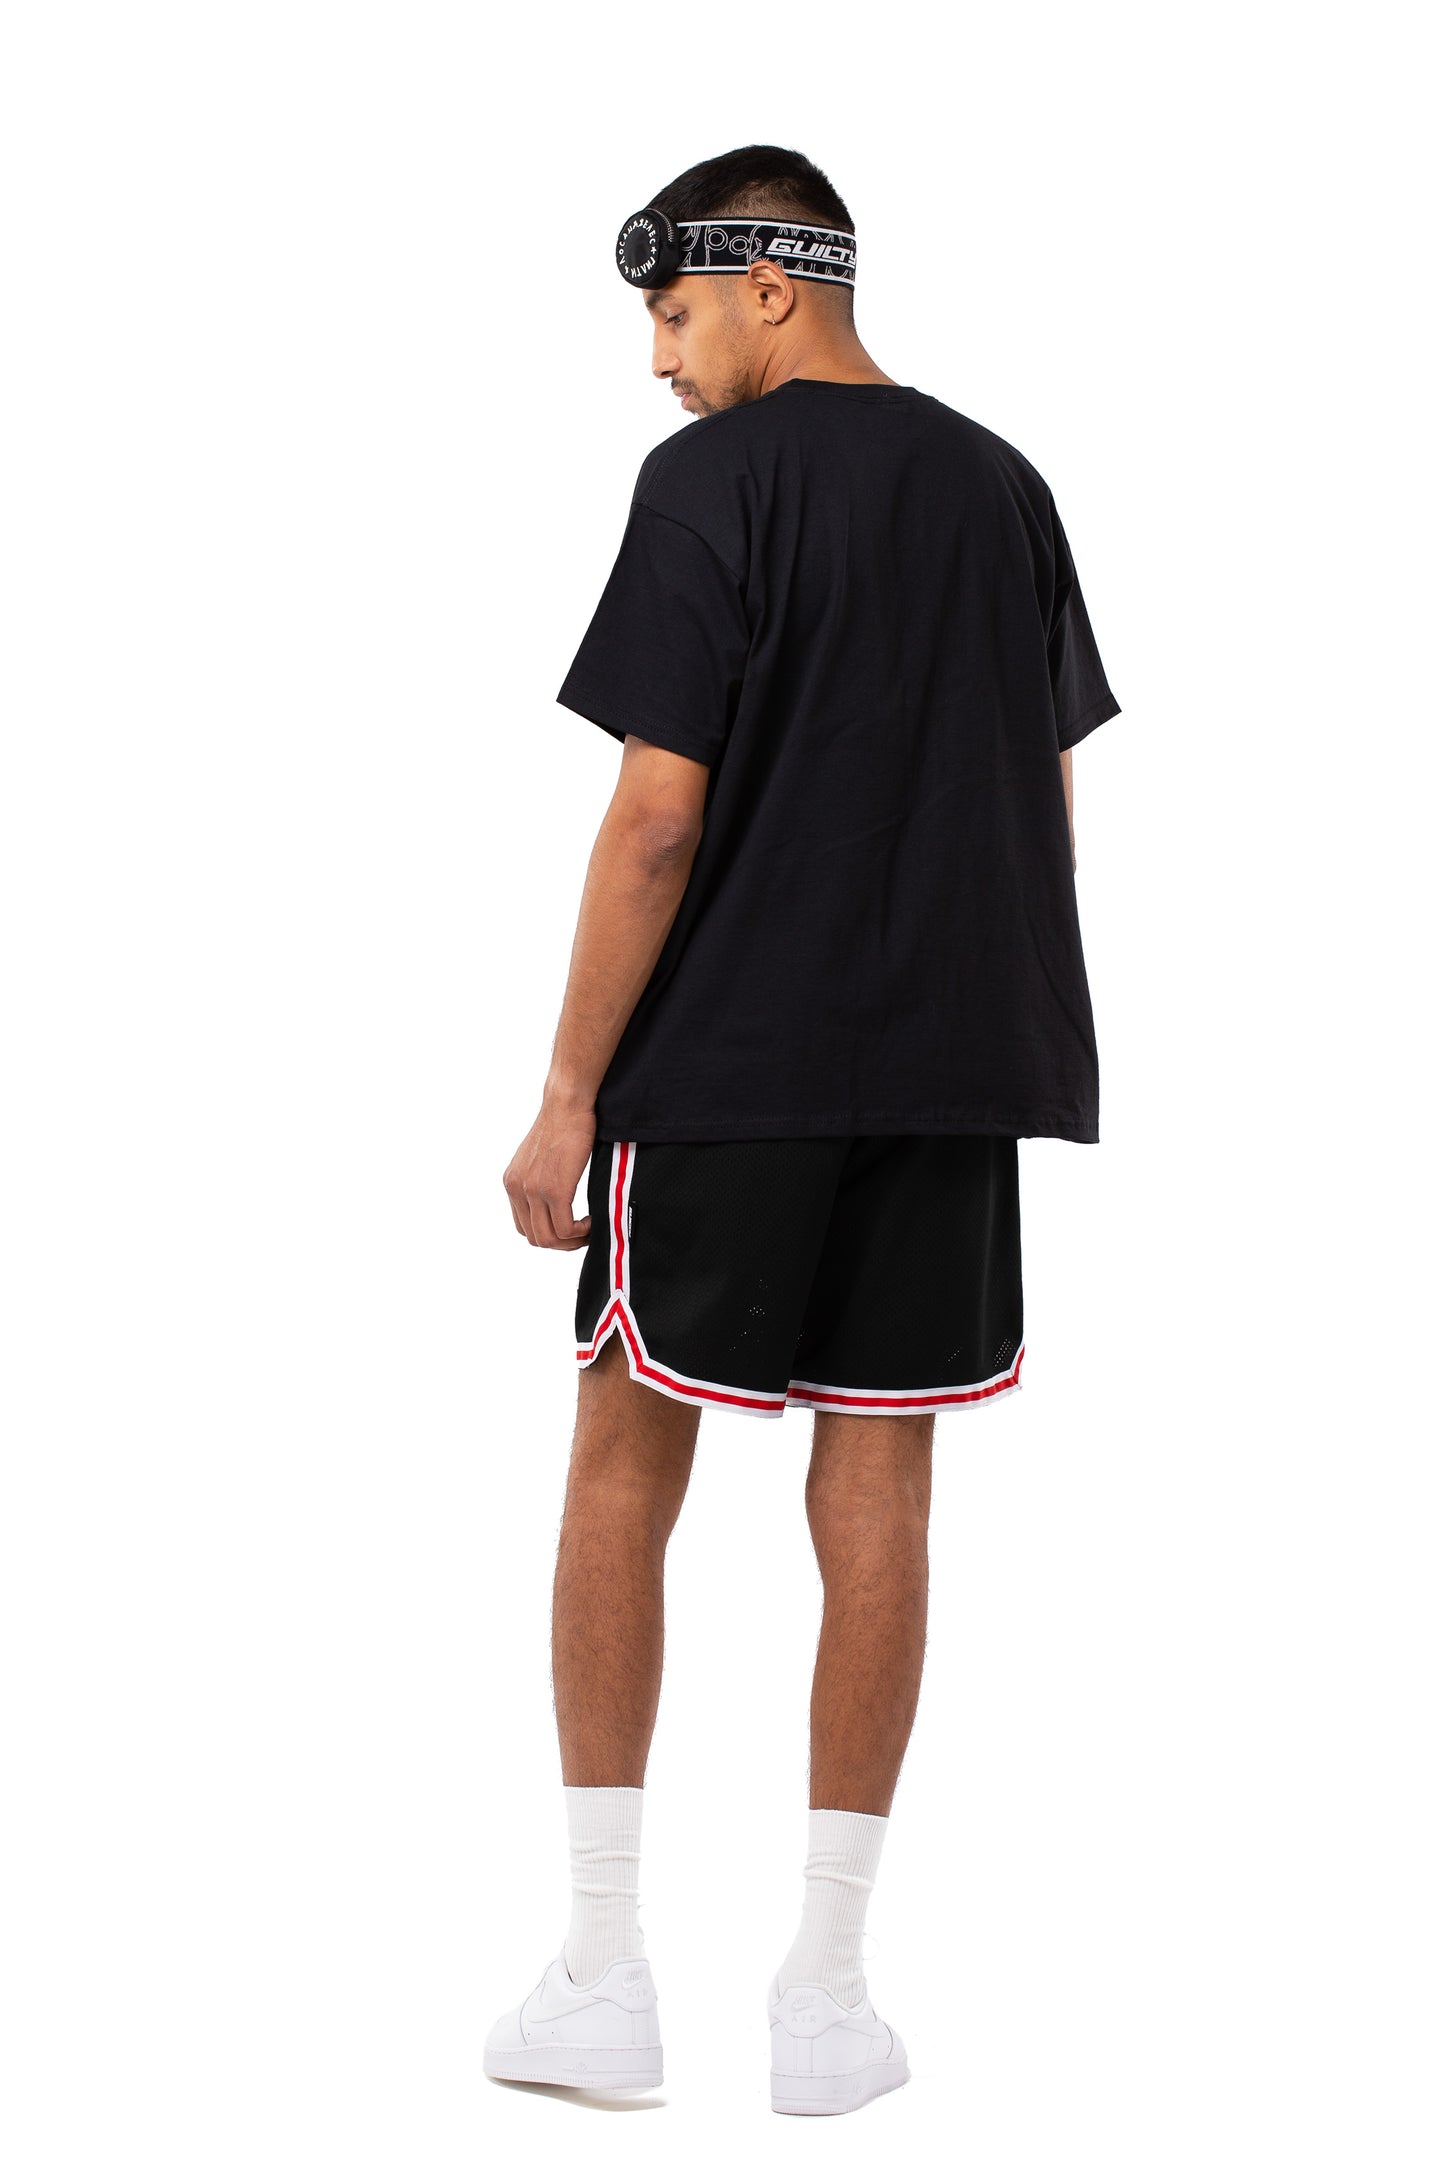 "GRAFFITI" Black Shorts